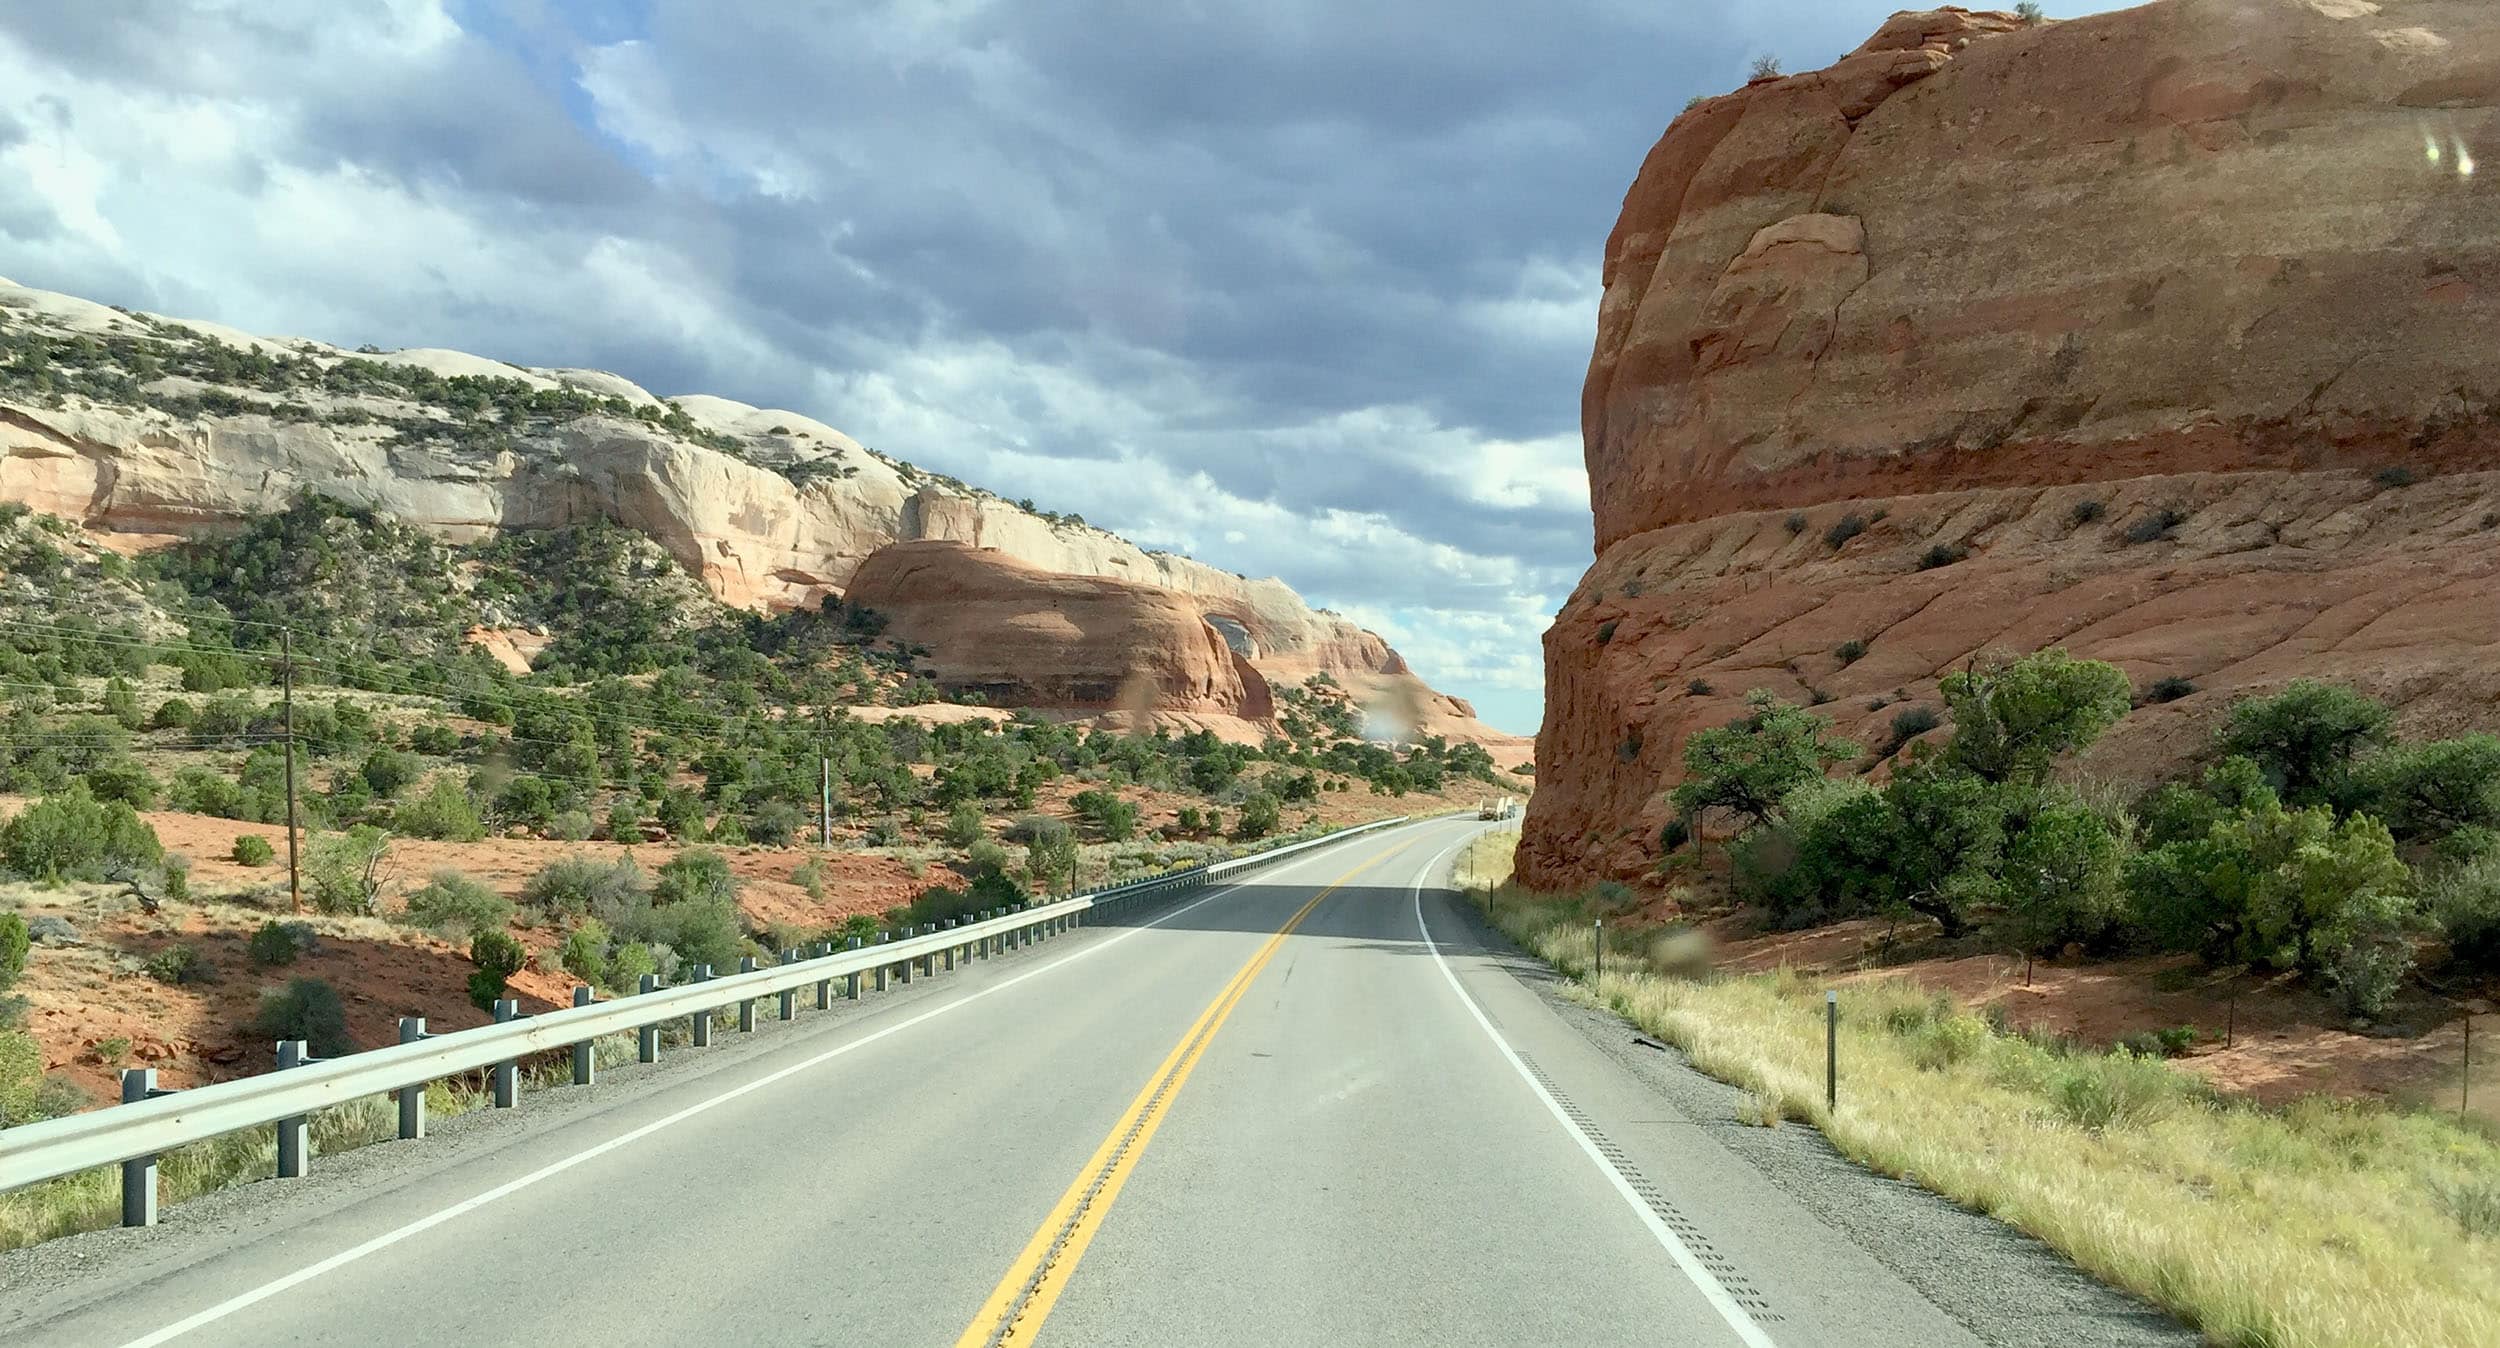 A highway winds through a rocky landscape.